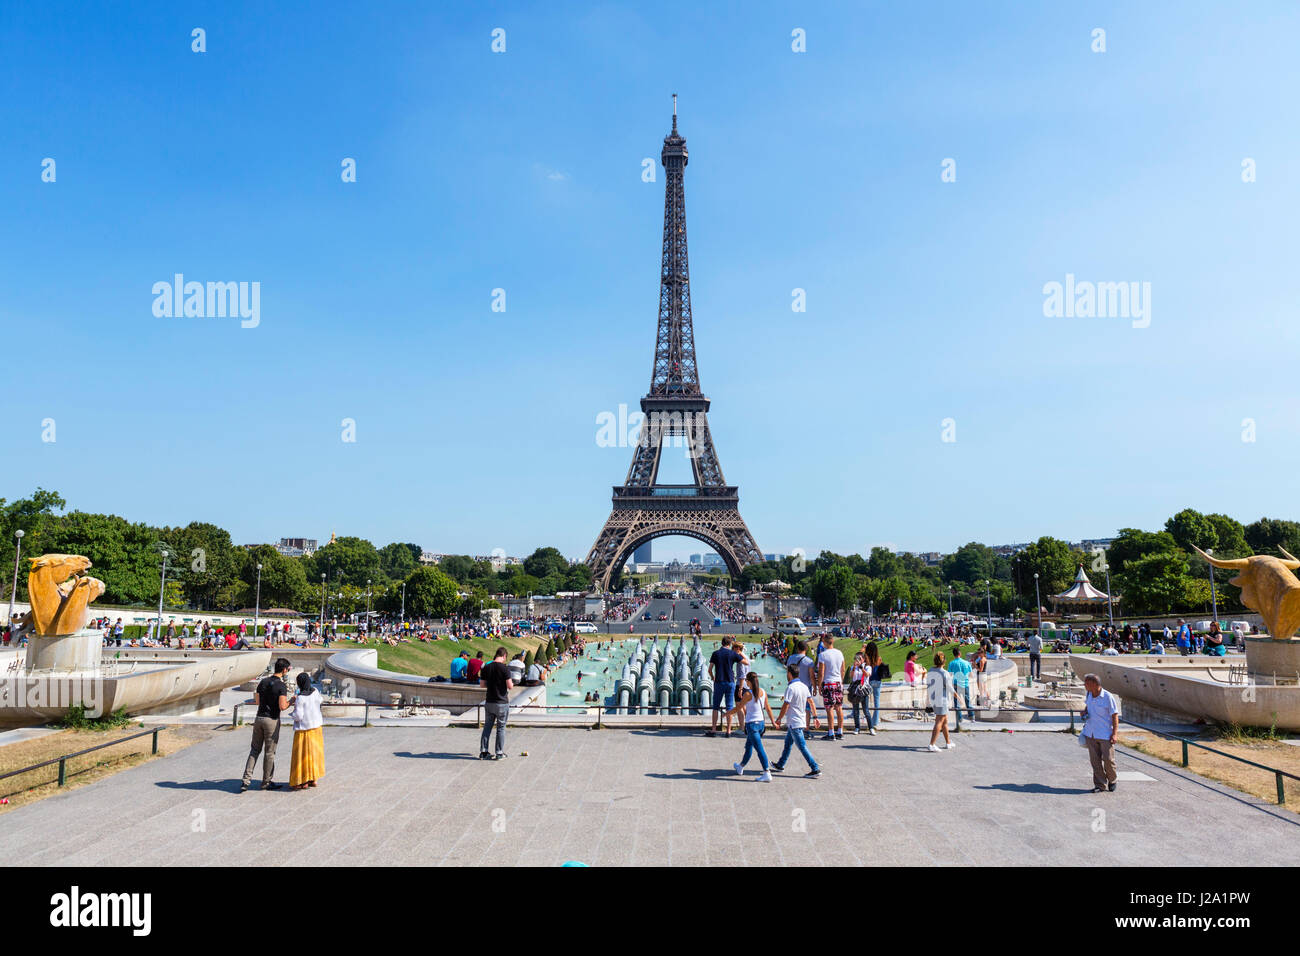 The Eiffel Tower (Tour Eiffel) from the Trocadero, Paris, France Stock Photo